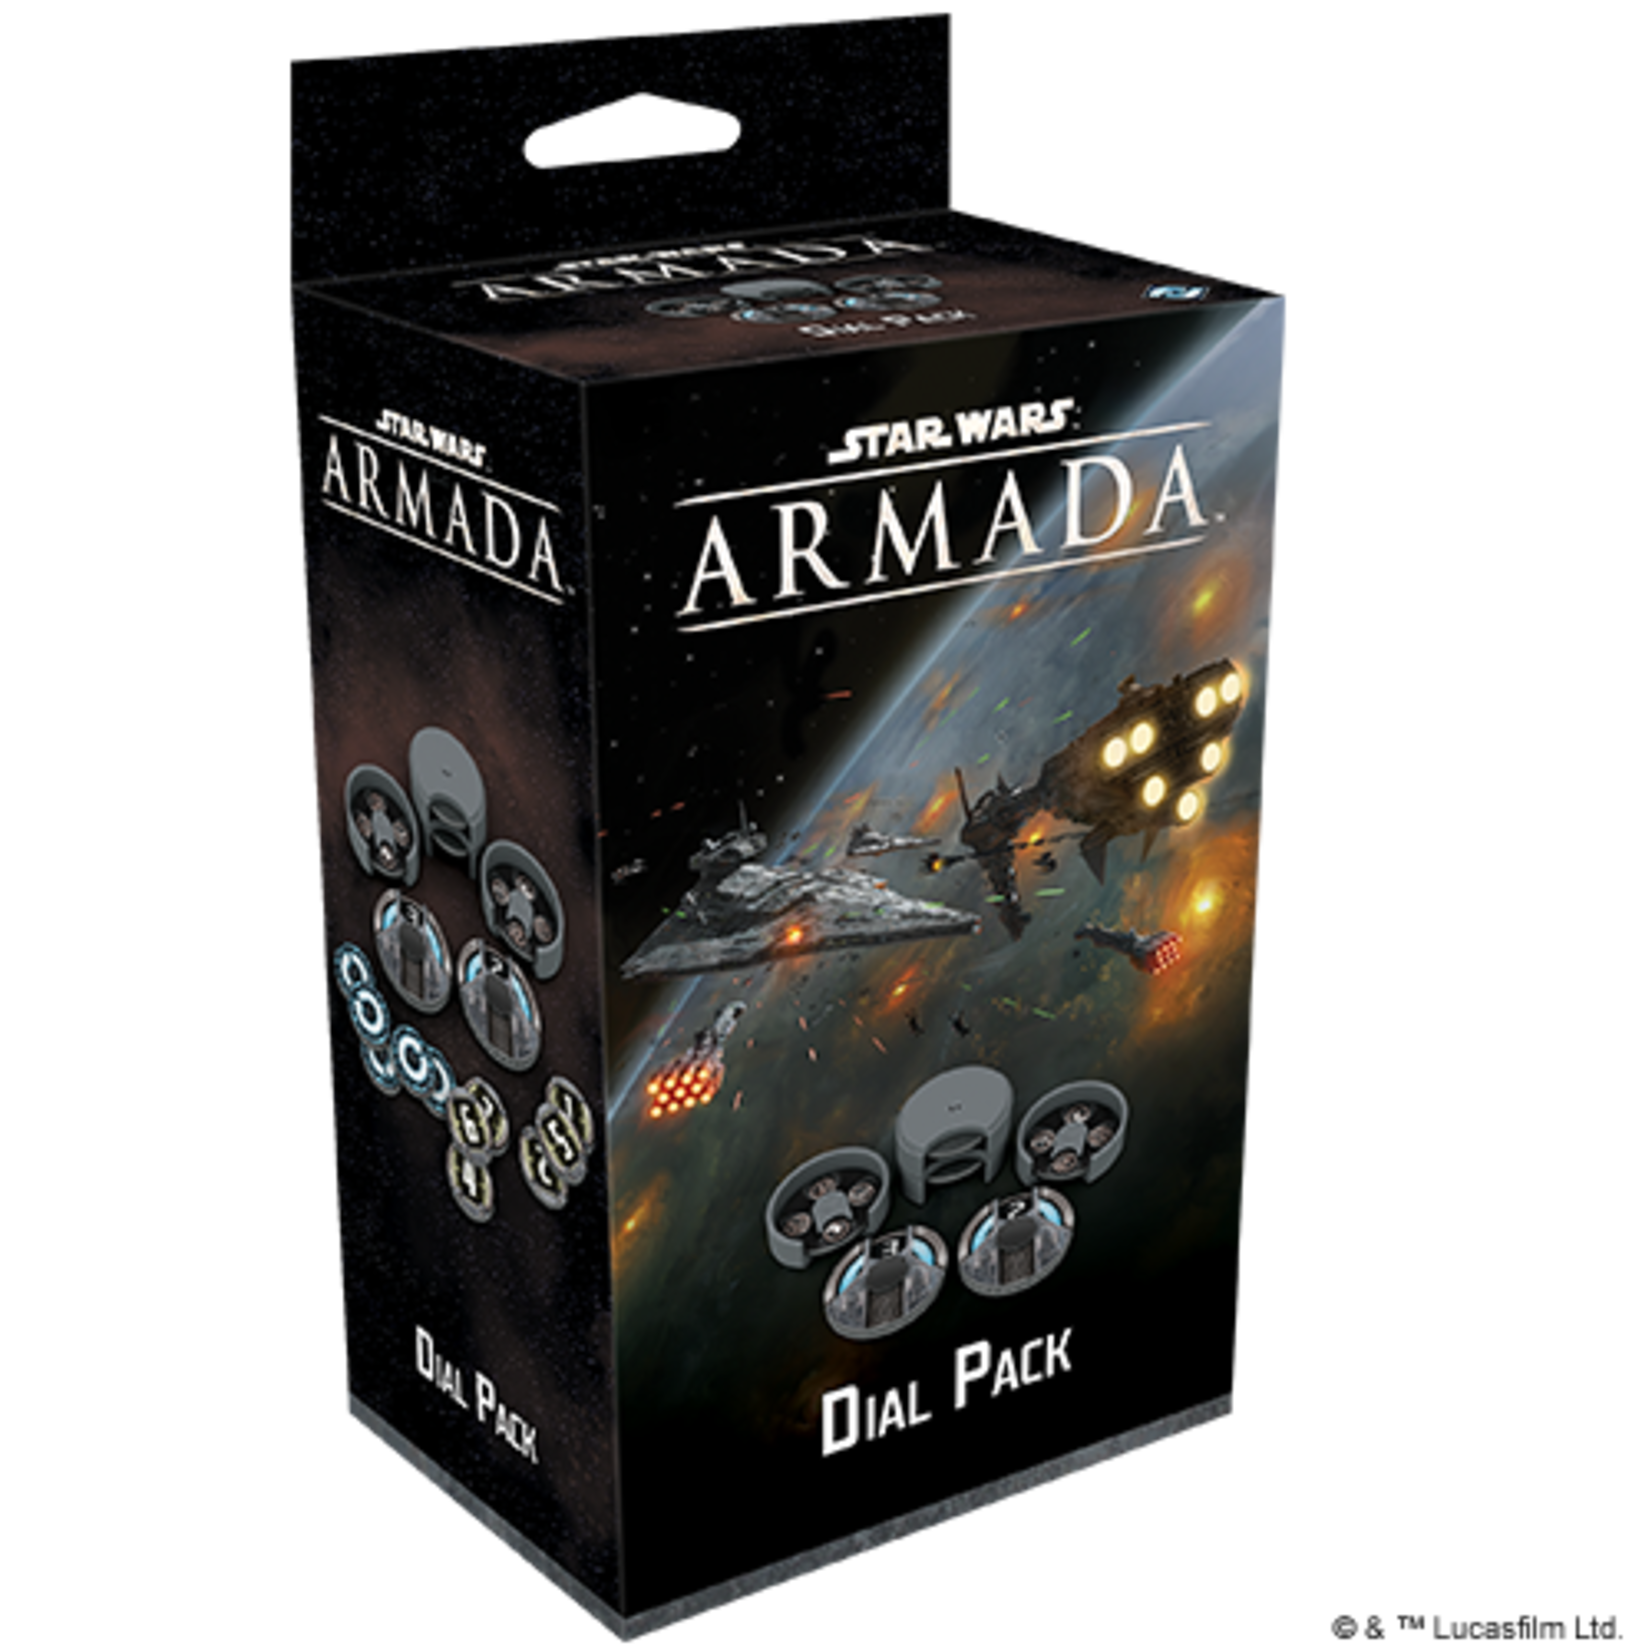 Atomic Mass Games Star Wars Armada Dial Pack